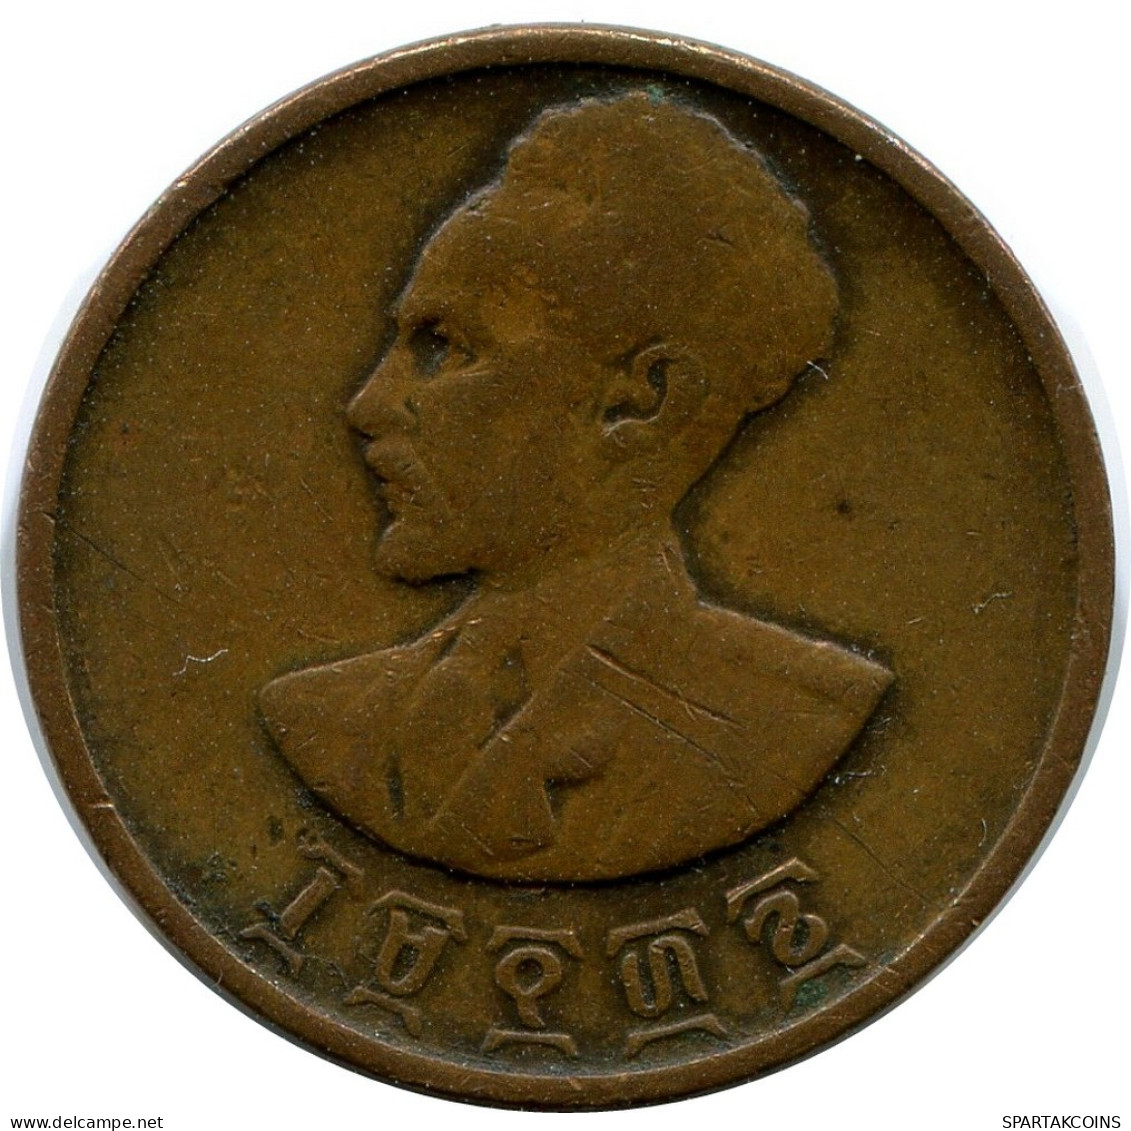 5 CENTS 1943-1944 ETHIOPIA Coin #AP877.U.A - Ethiopia